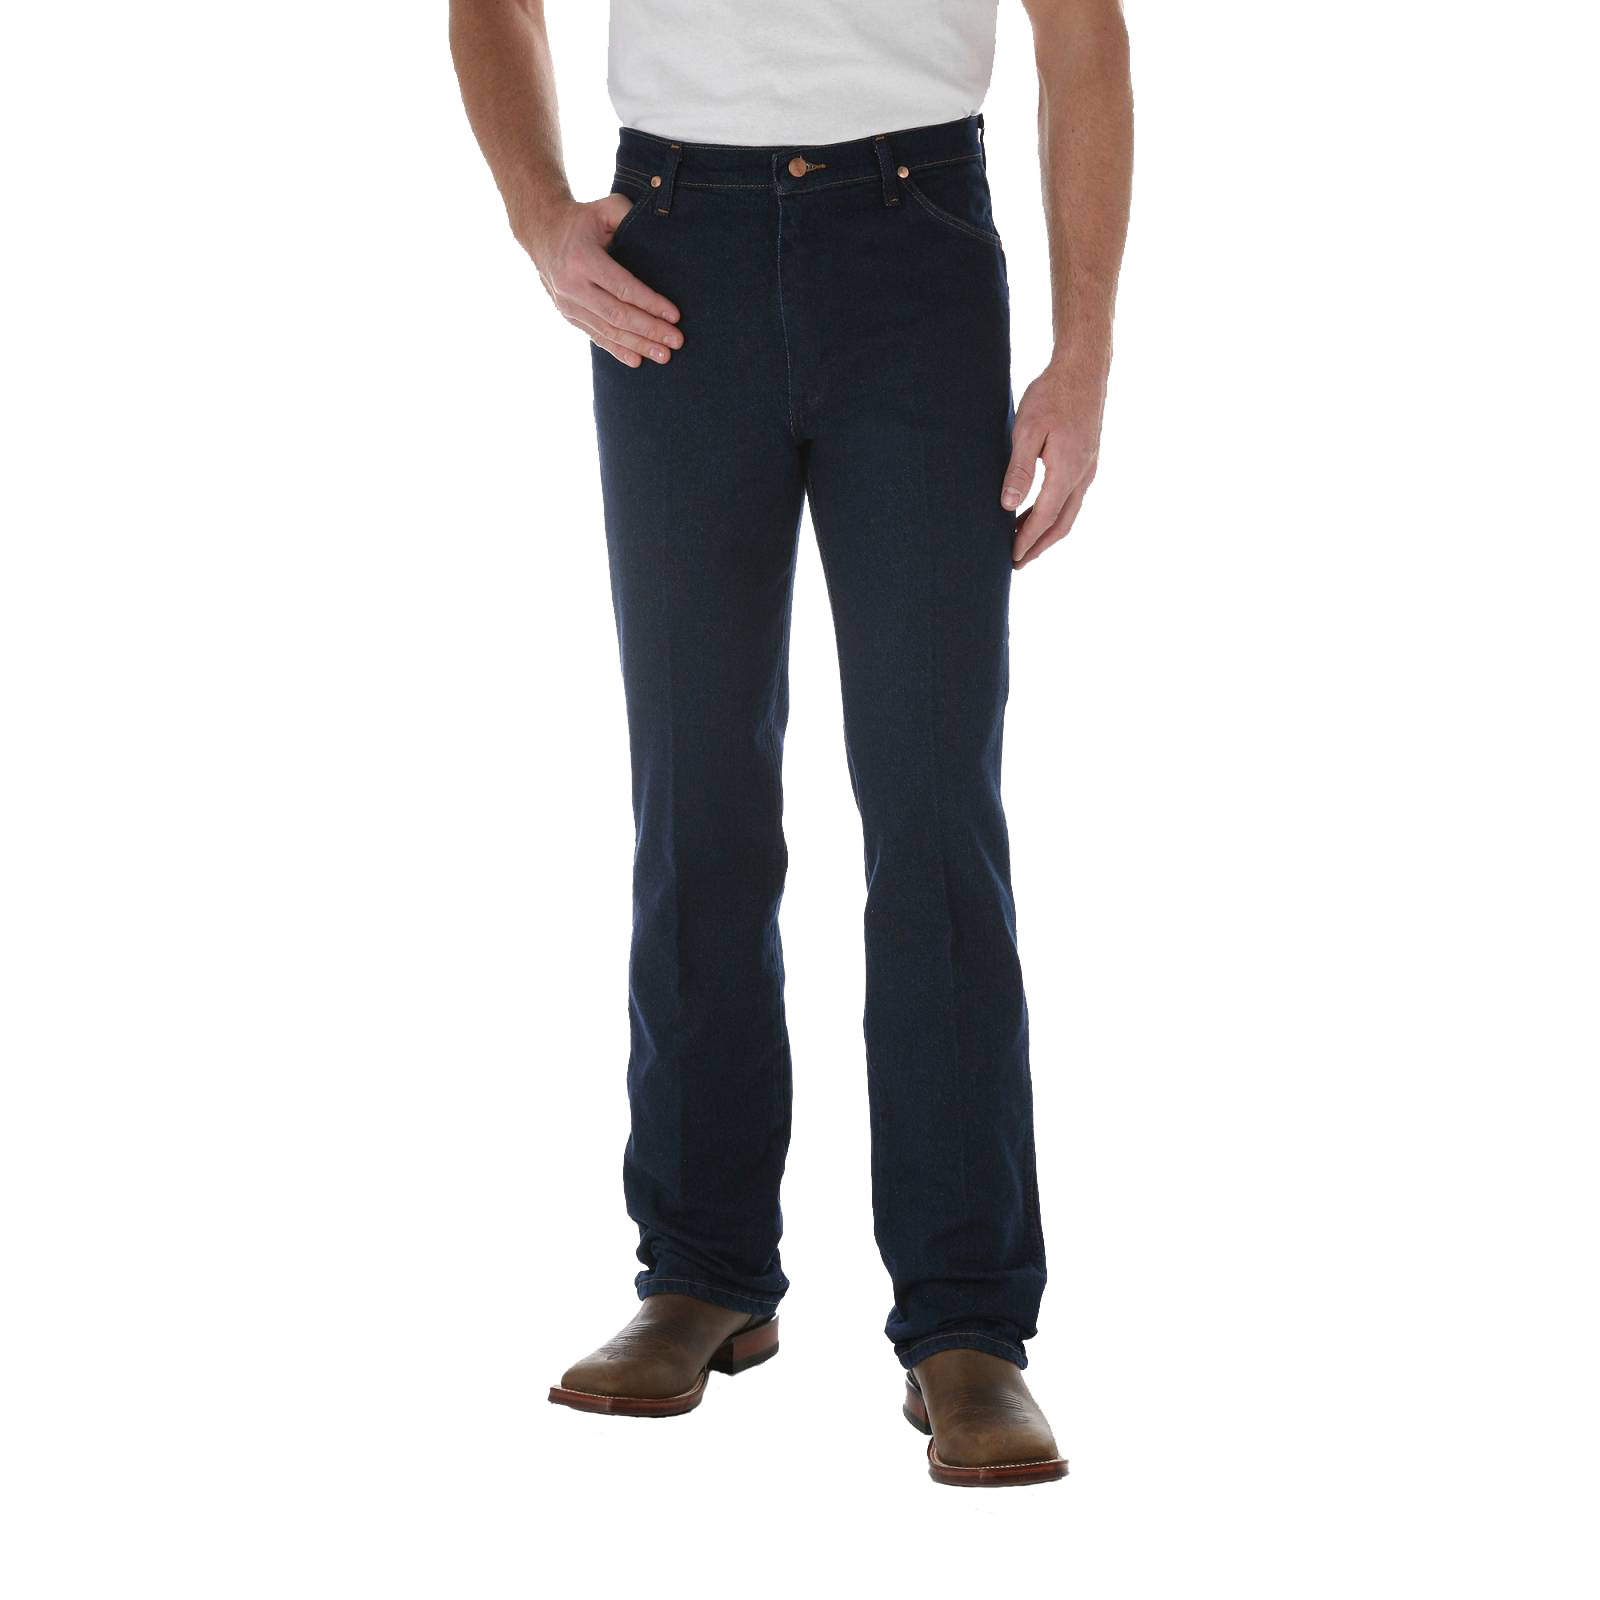 Men’s Wrangler Western Boot Cut Jeans – Slim Fit Navy Stretch